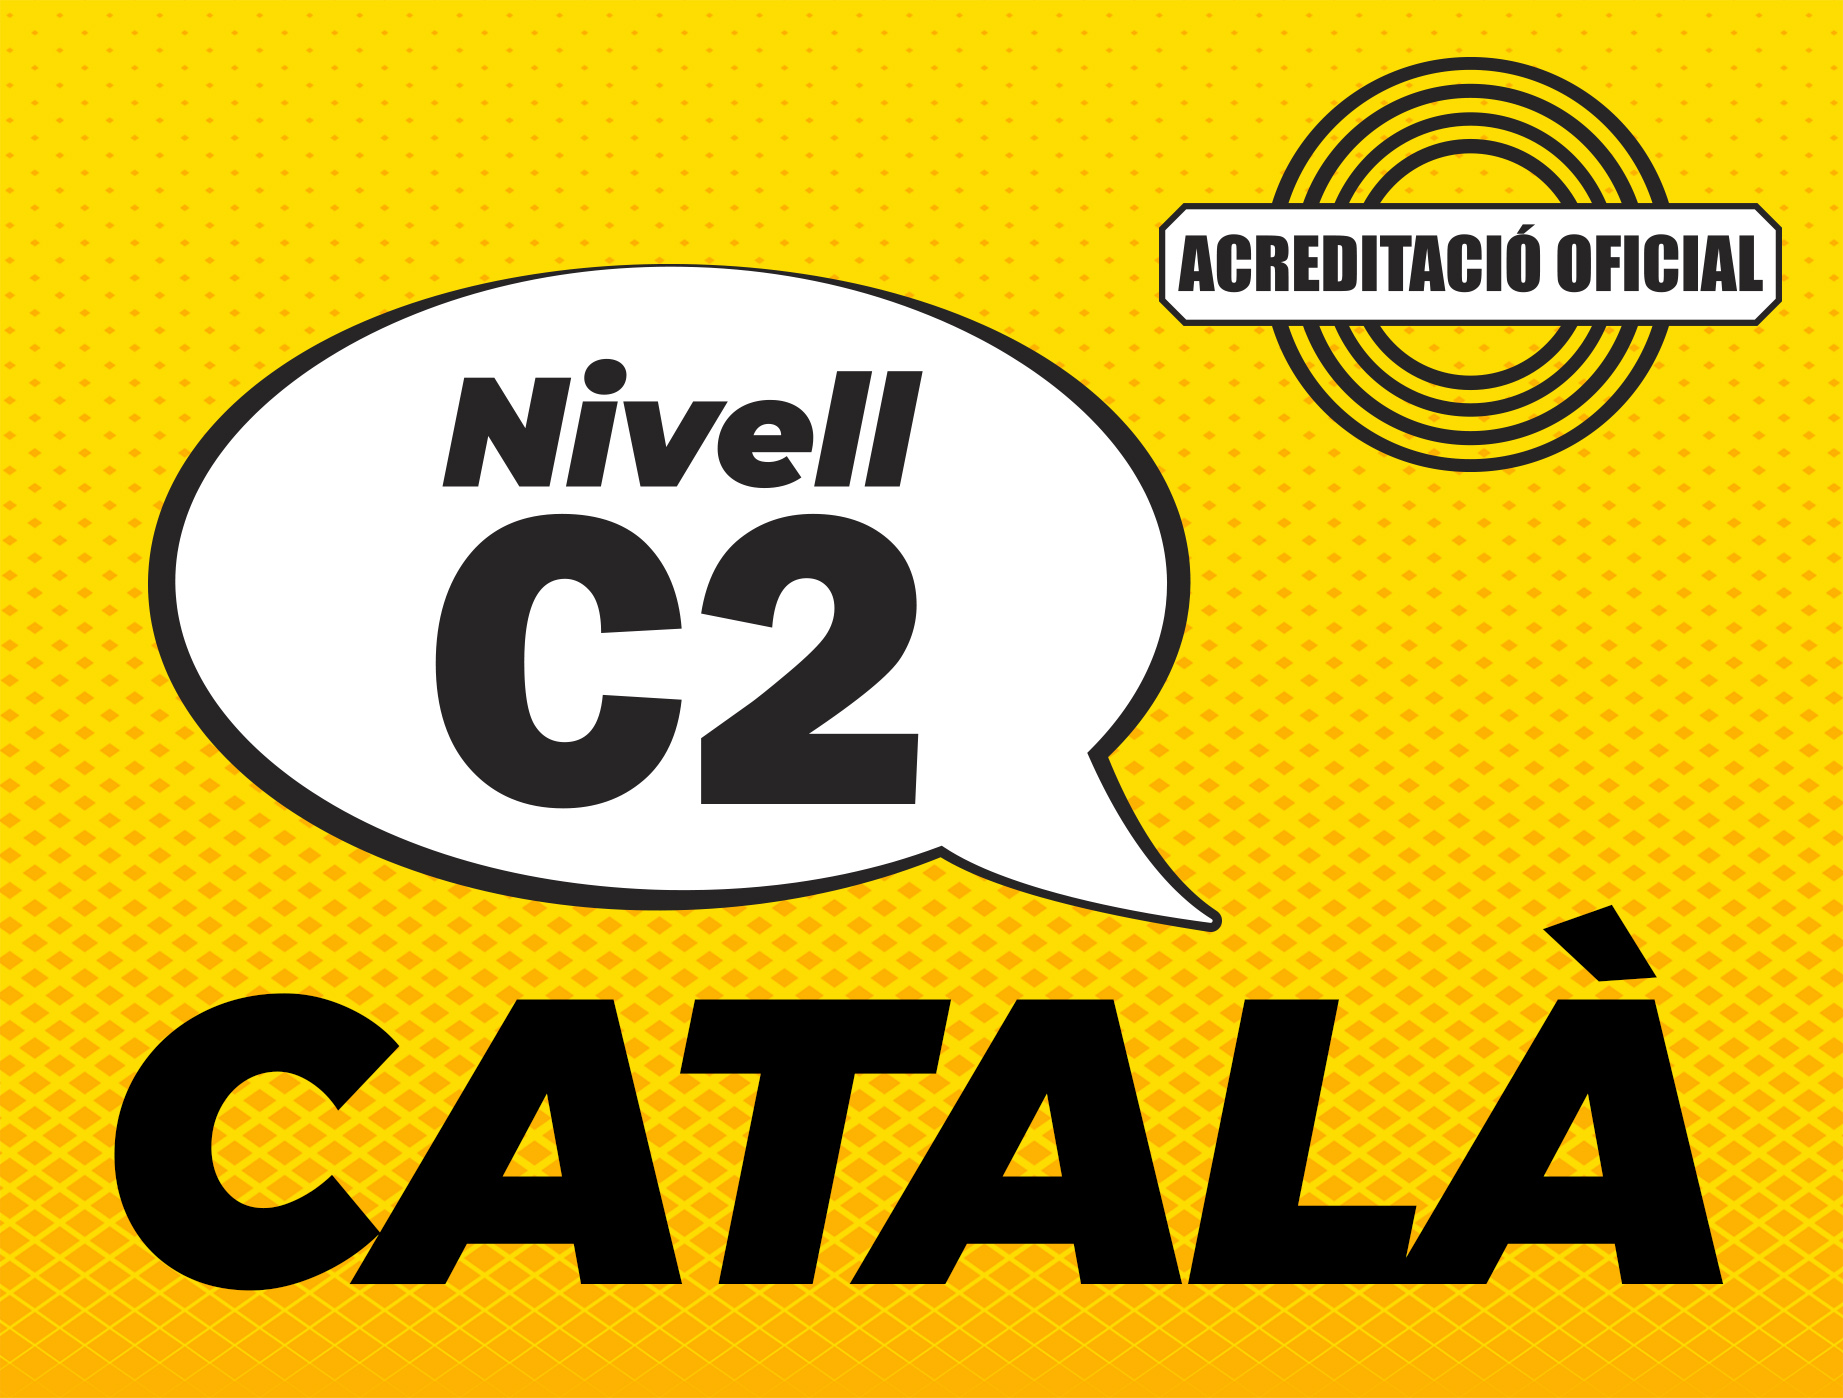 Català C2